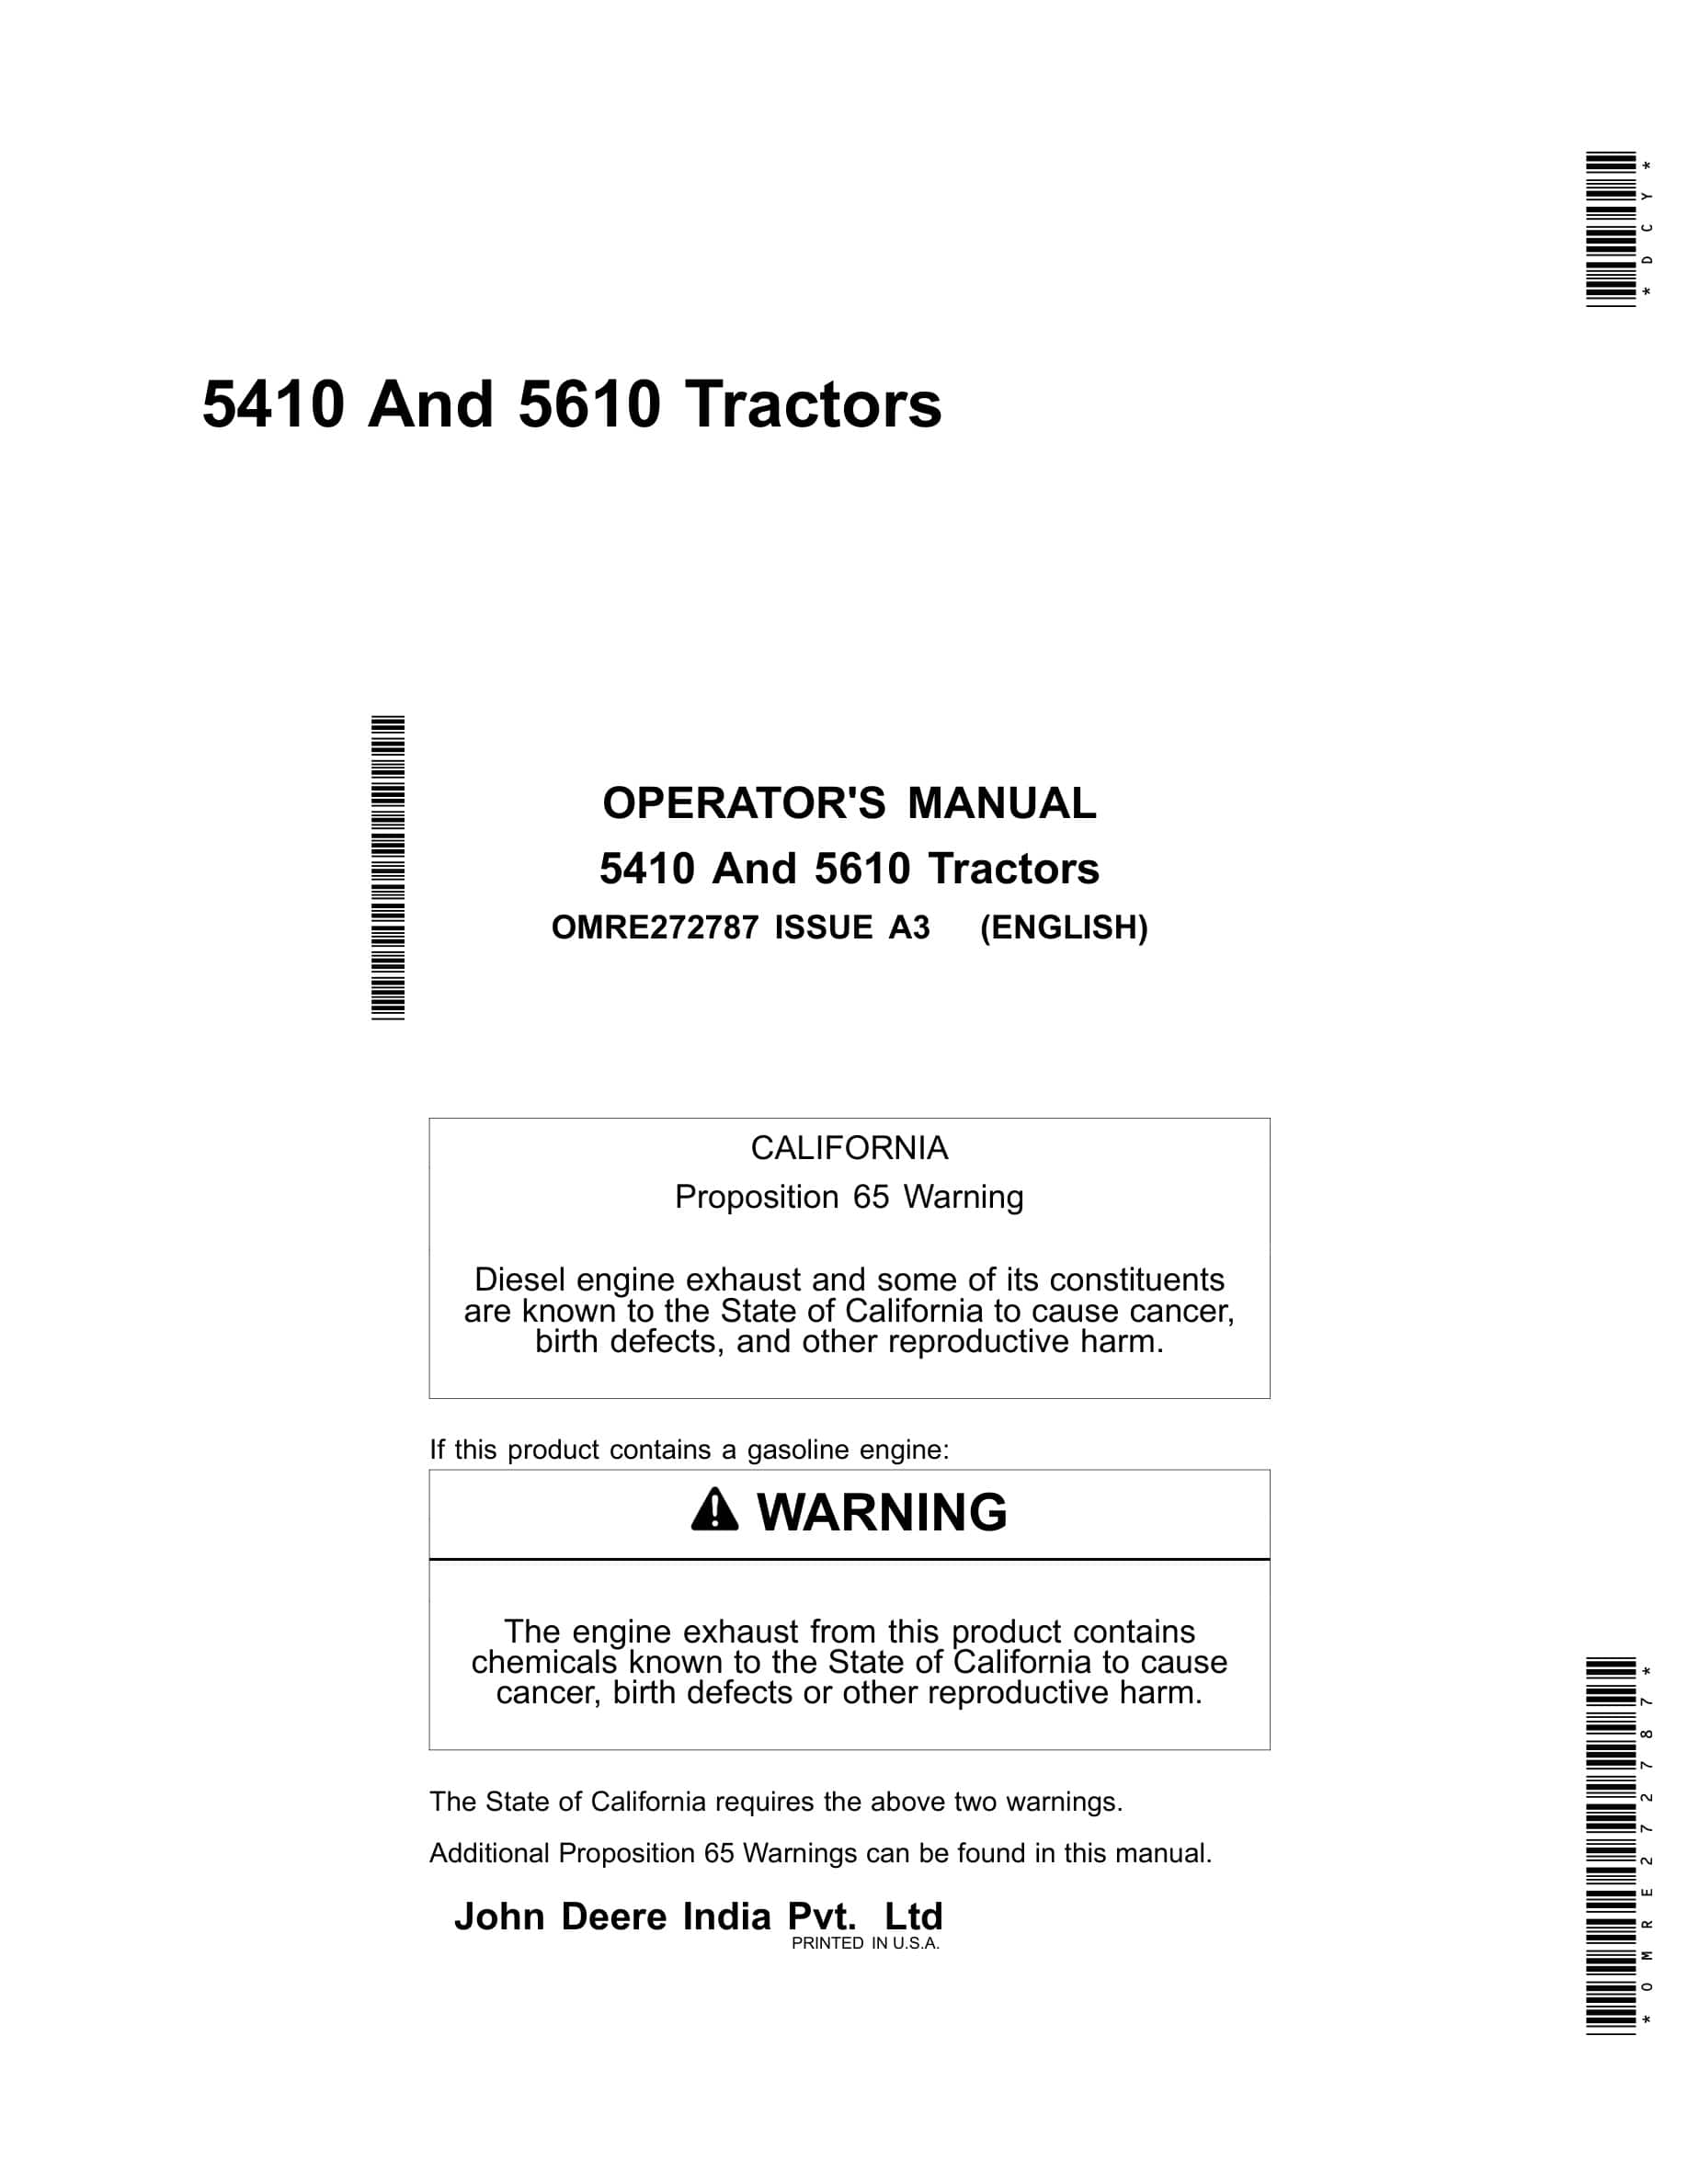 John Deere 5410 And 5610 Tractors Operator Manuals OMRE272787-1